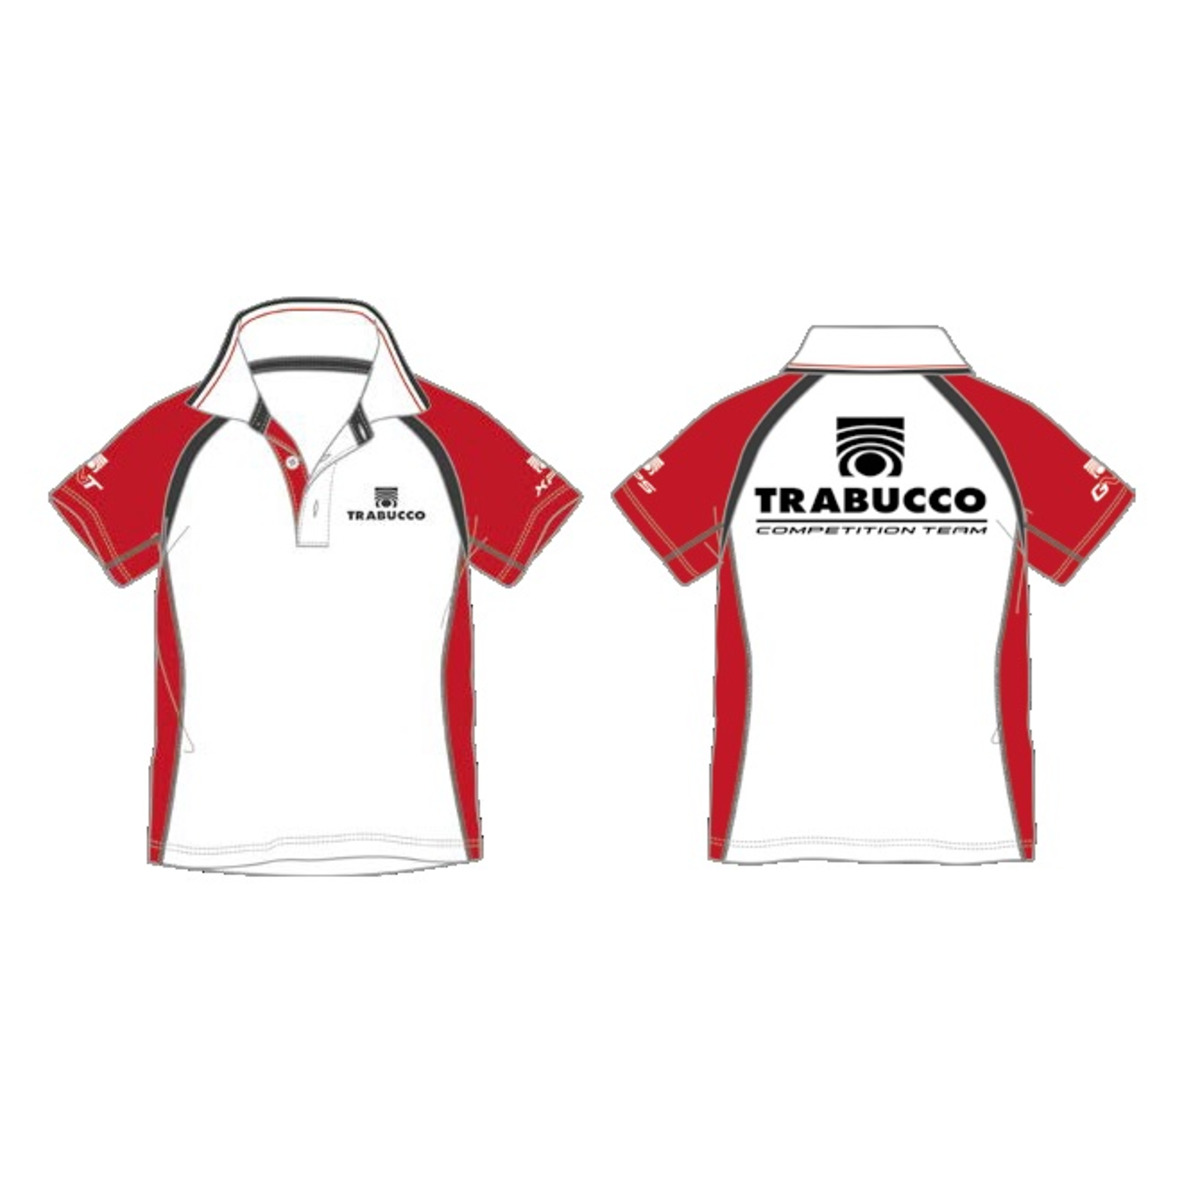 Trabucco Gtn Teck Polo Shirt - M